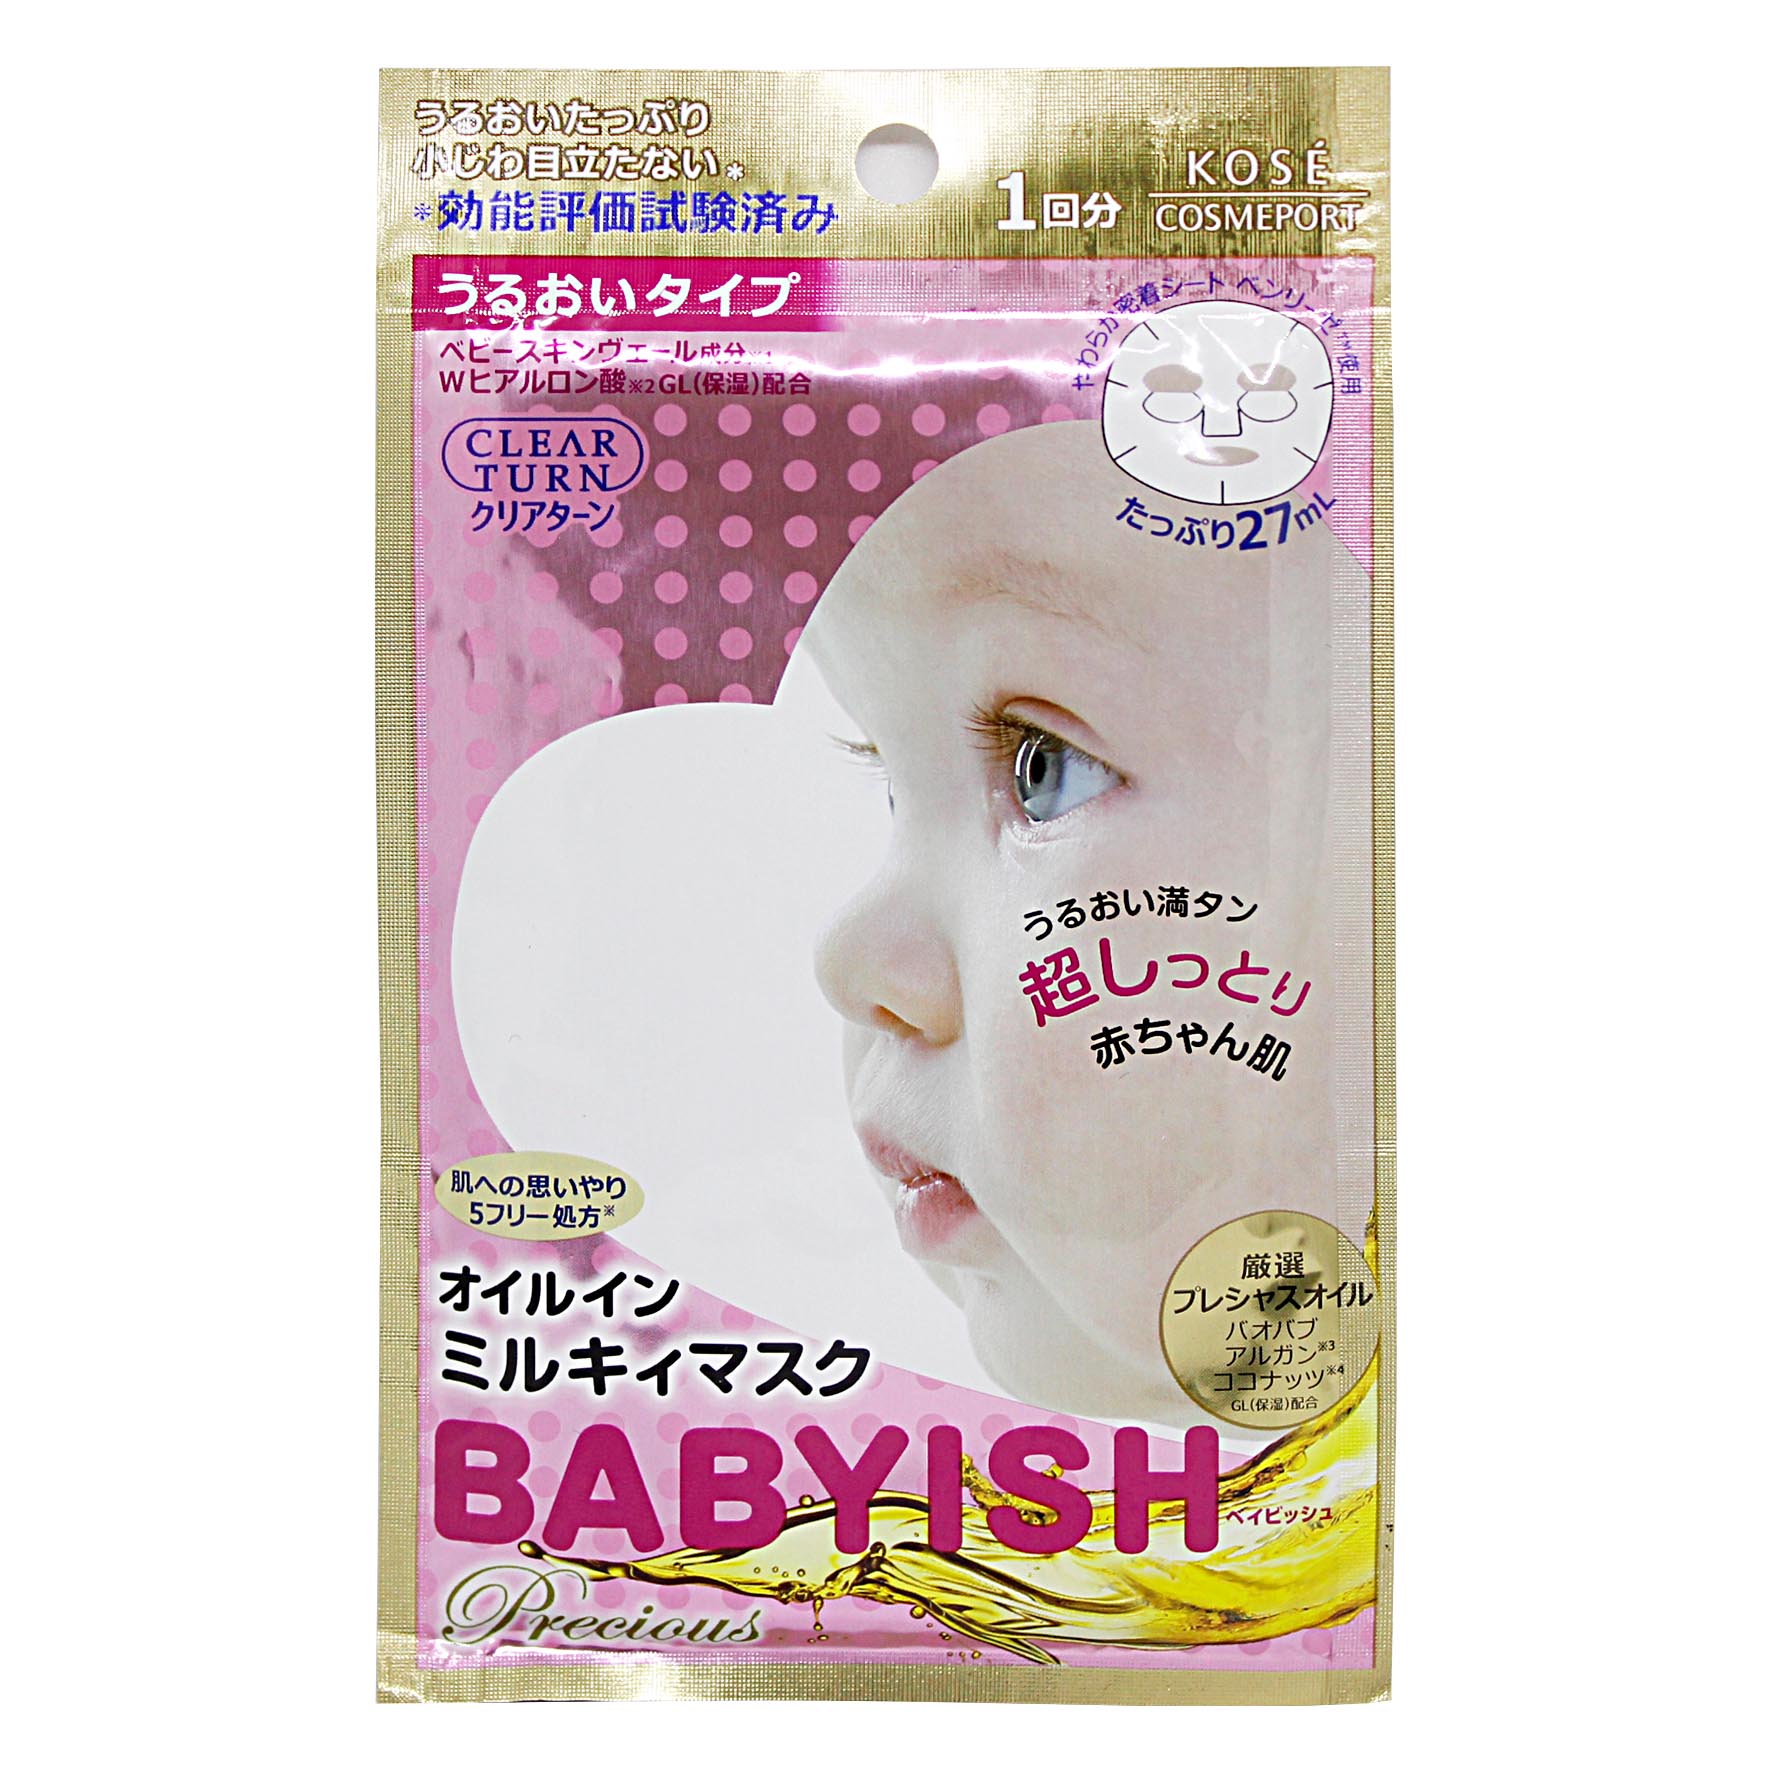 kose-clear-turn-babyish-precious-mask-a-1-sheets-buy1-get1-71-1609227625.jpg